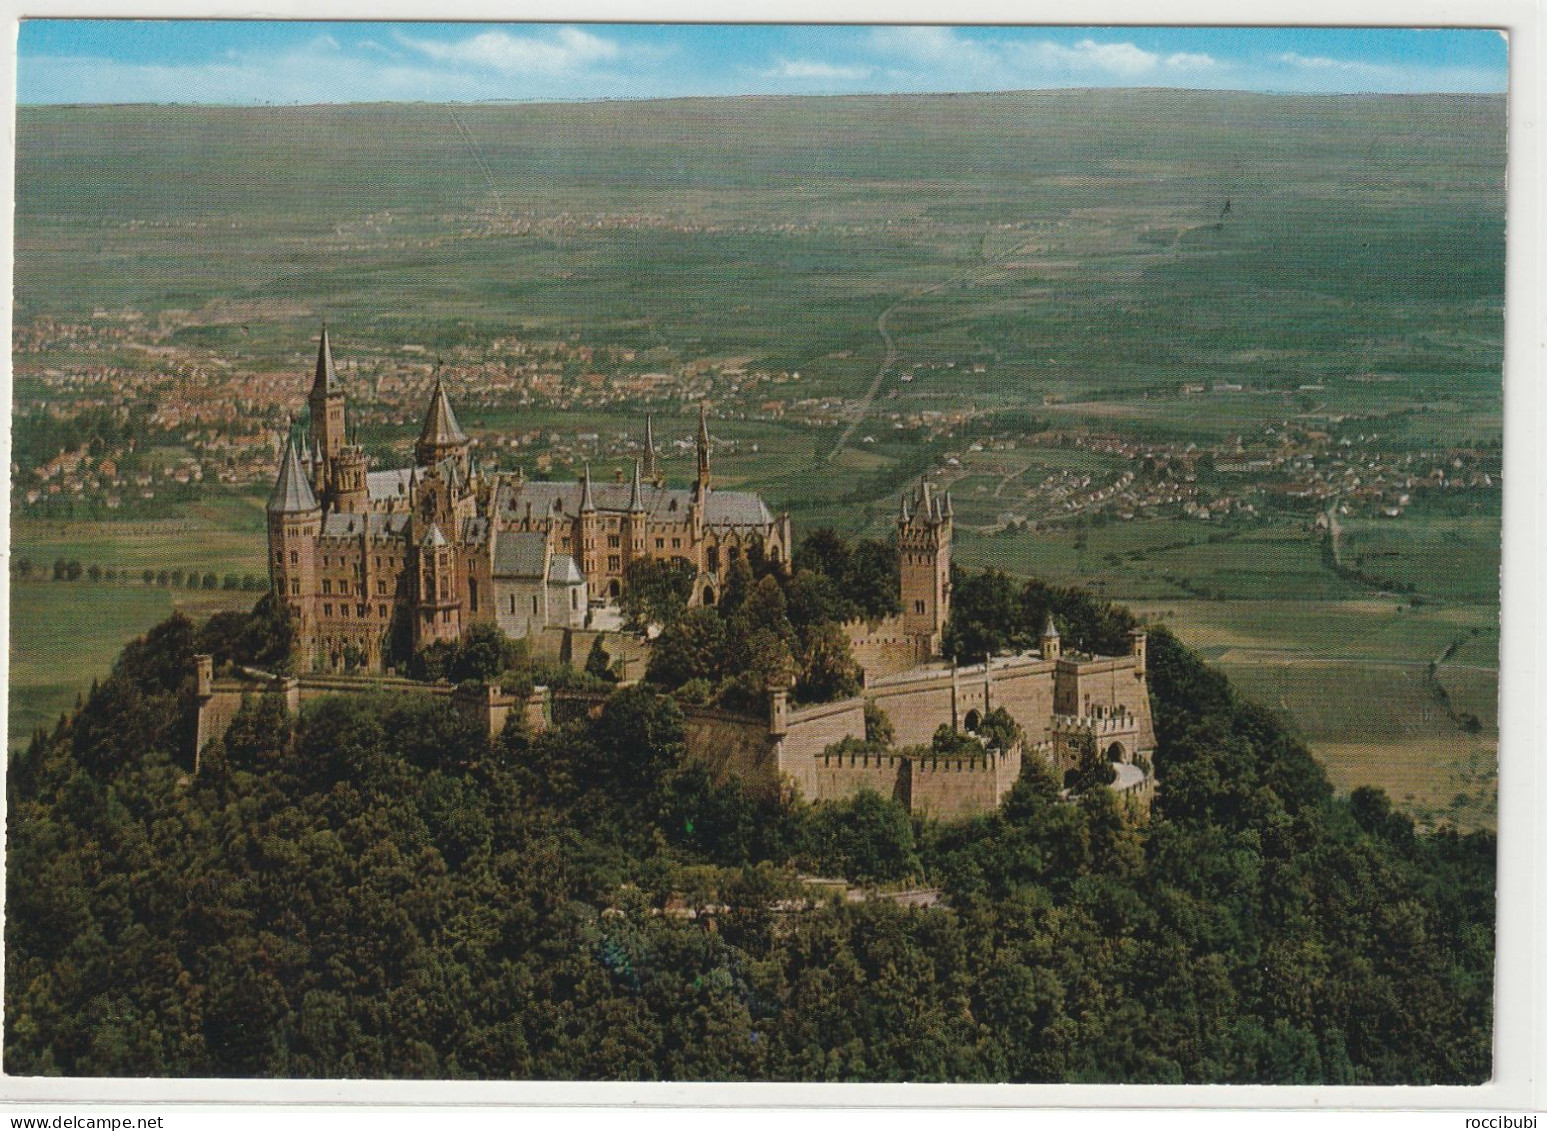 Hechingen, Burg Hohenzollern, Baden-Württemberg - Hechingen